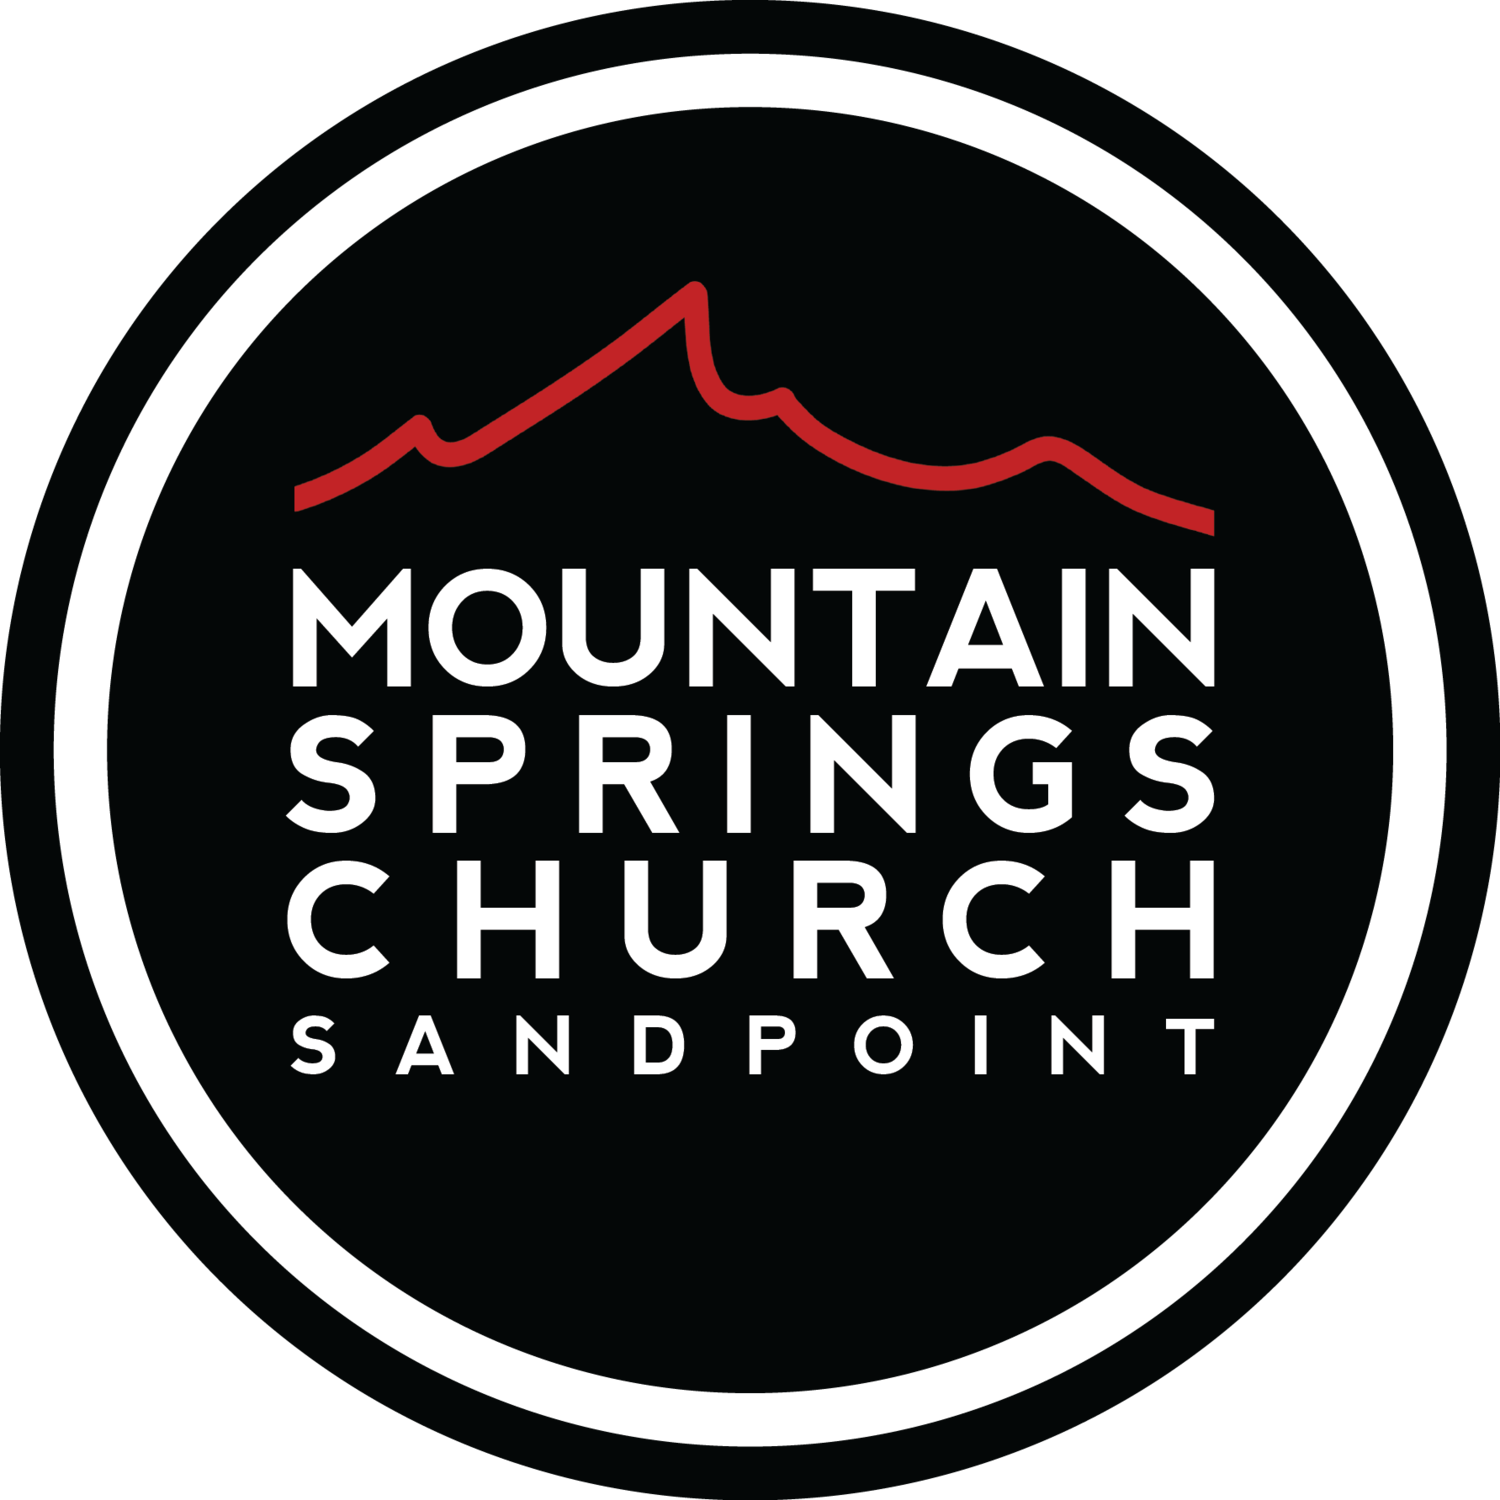 Mountain Springs Church Sandpoint